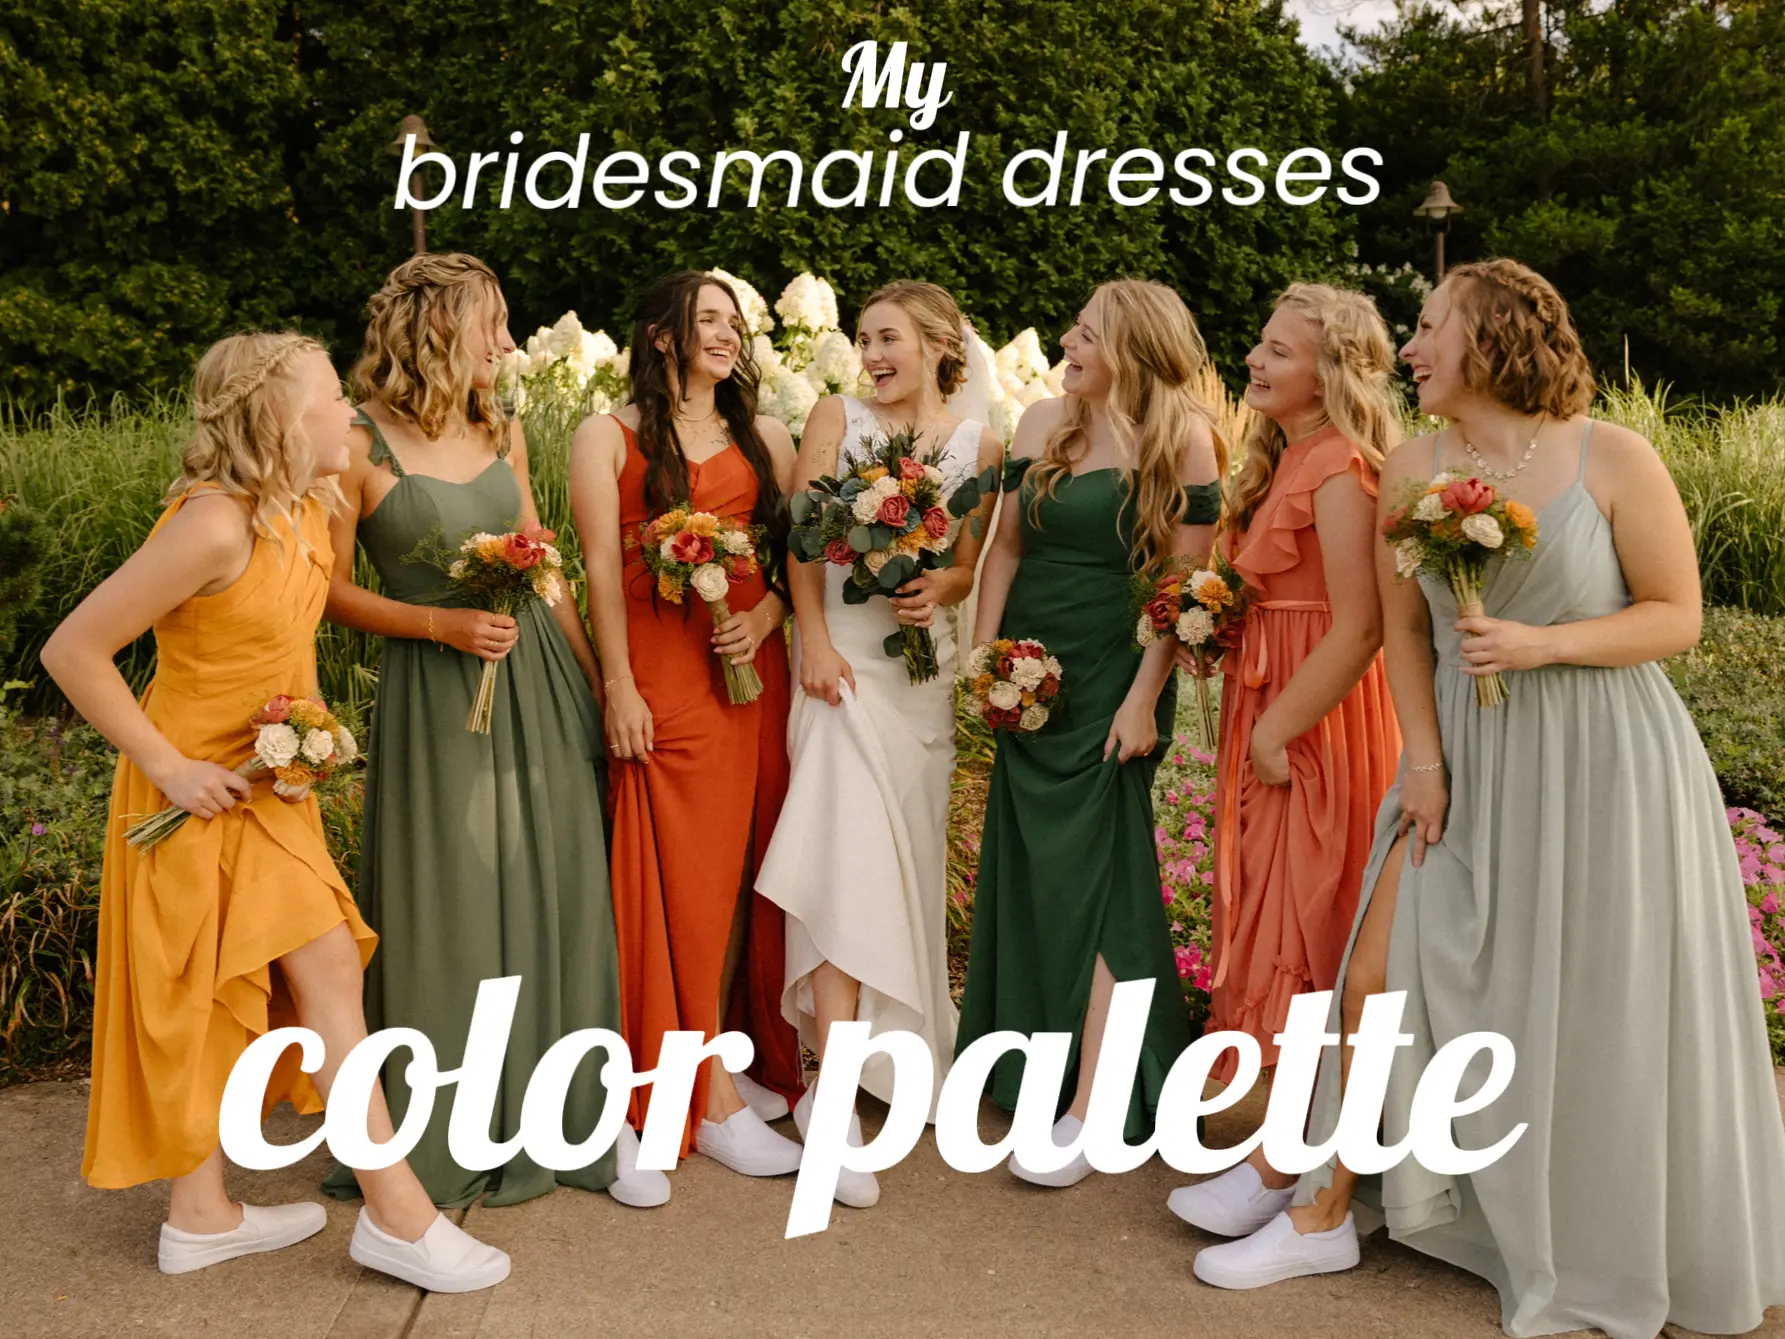 8 Popular Terracotta Wedding Color Combos for 2024 - ColorsBridesmaid